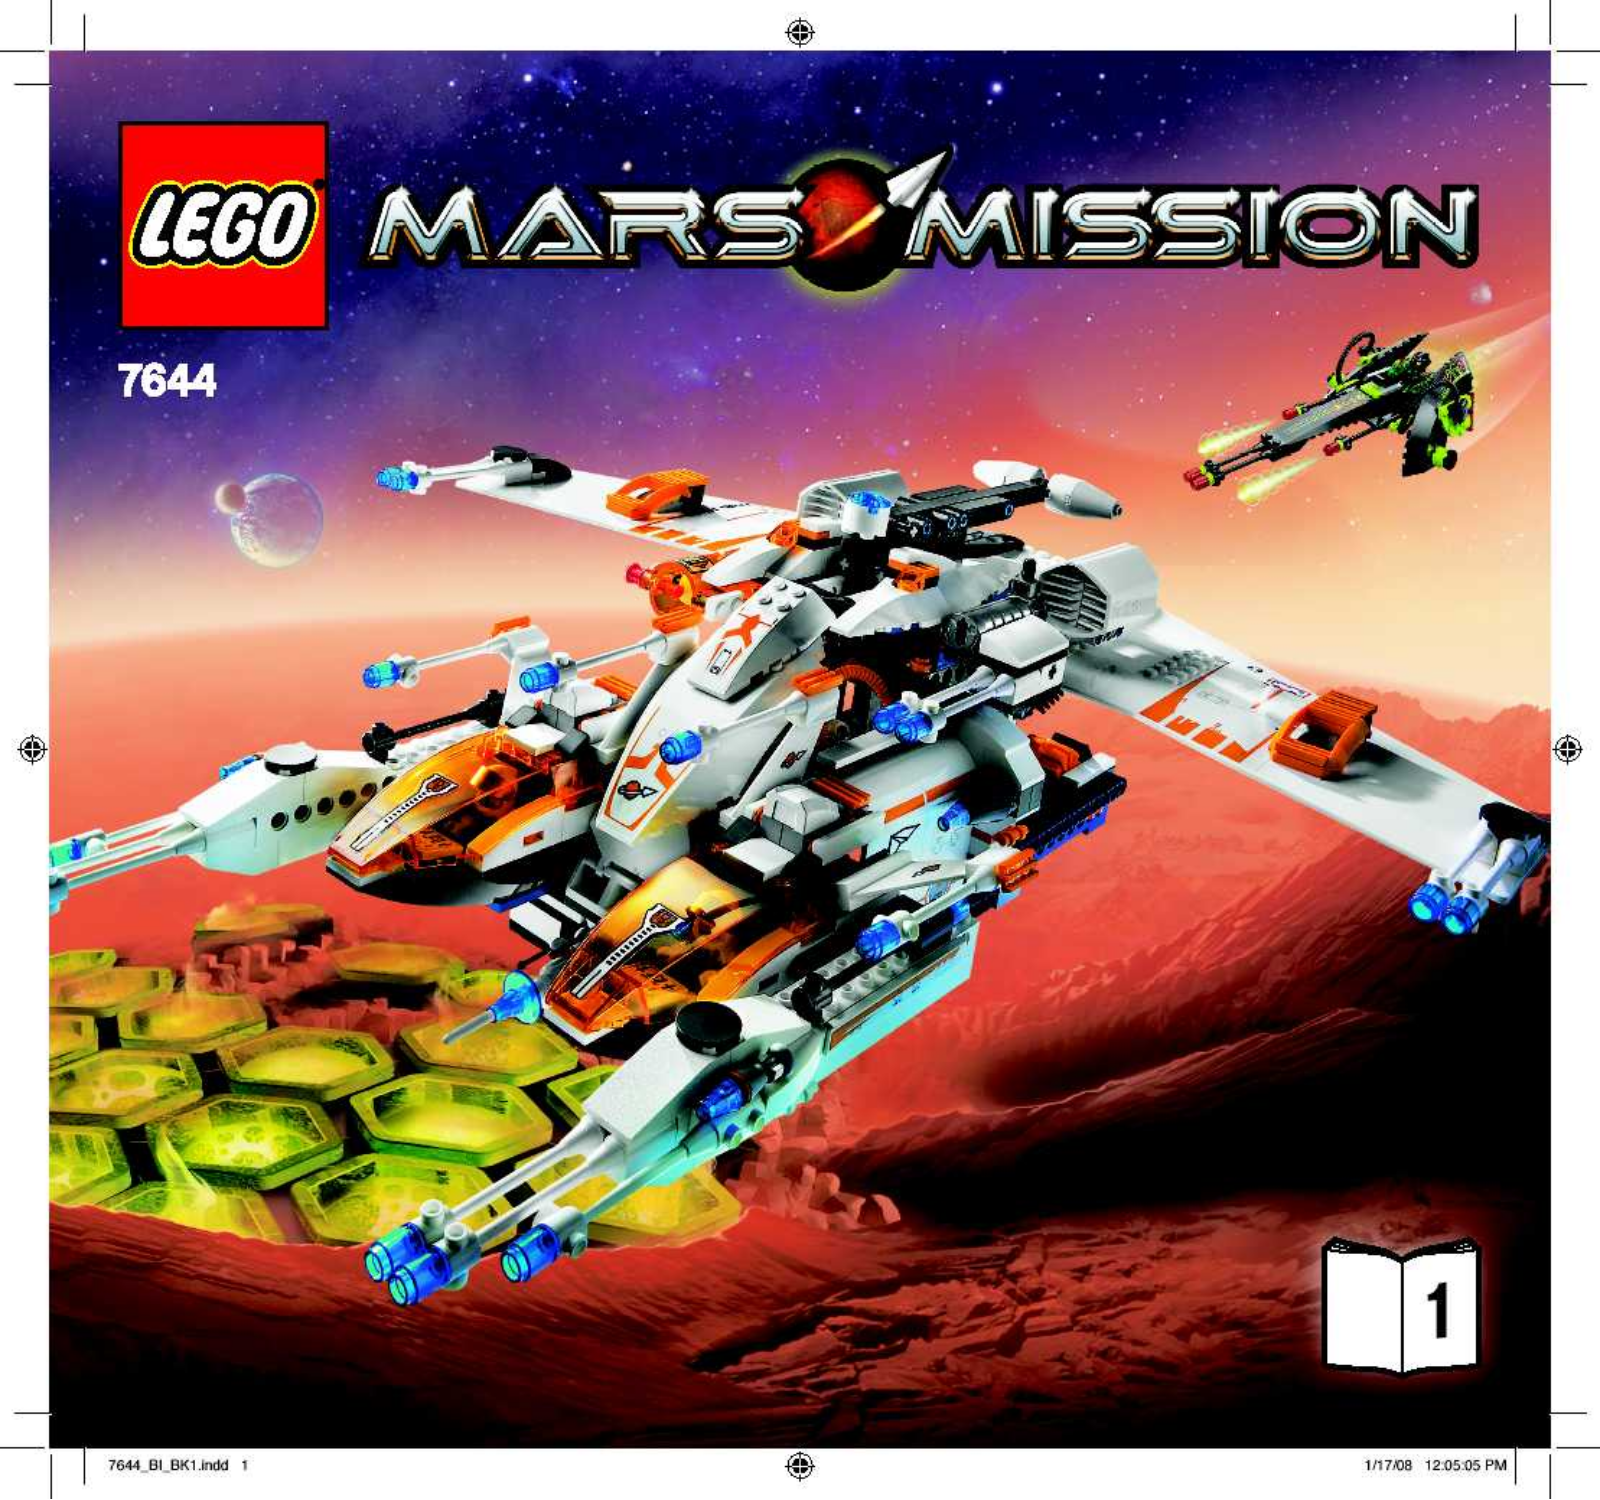 LEGO 7644 Service Manual